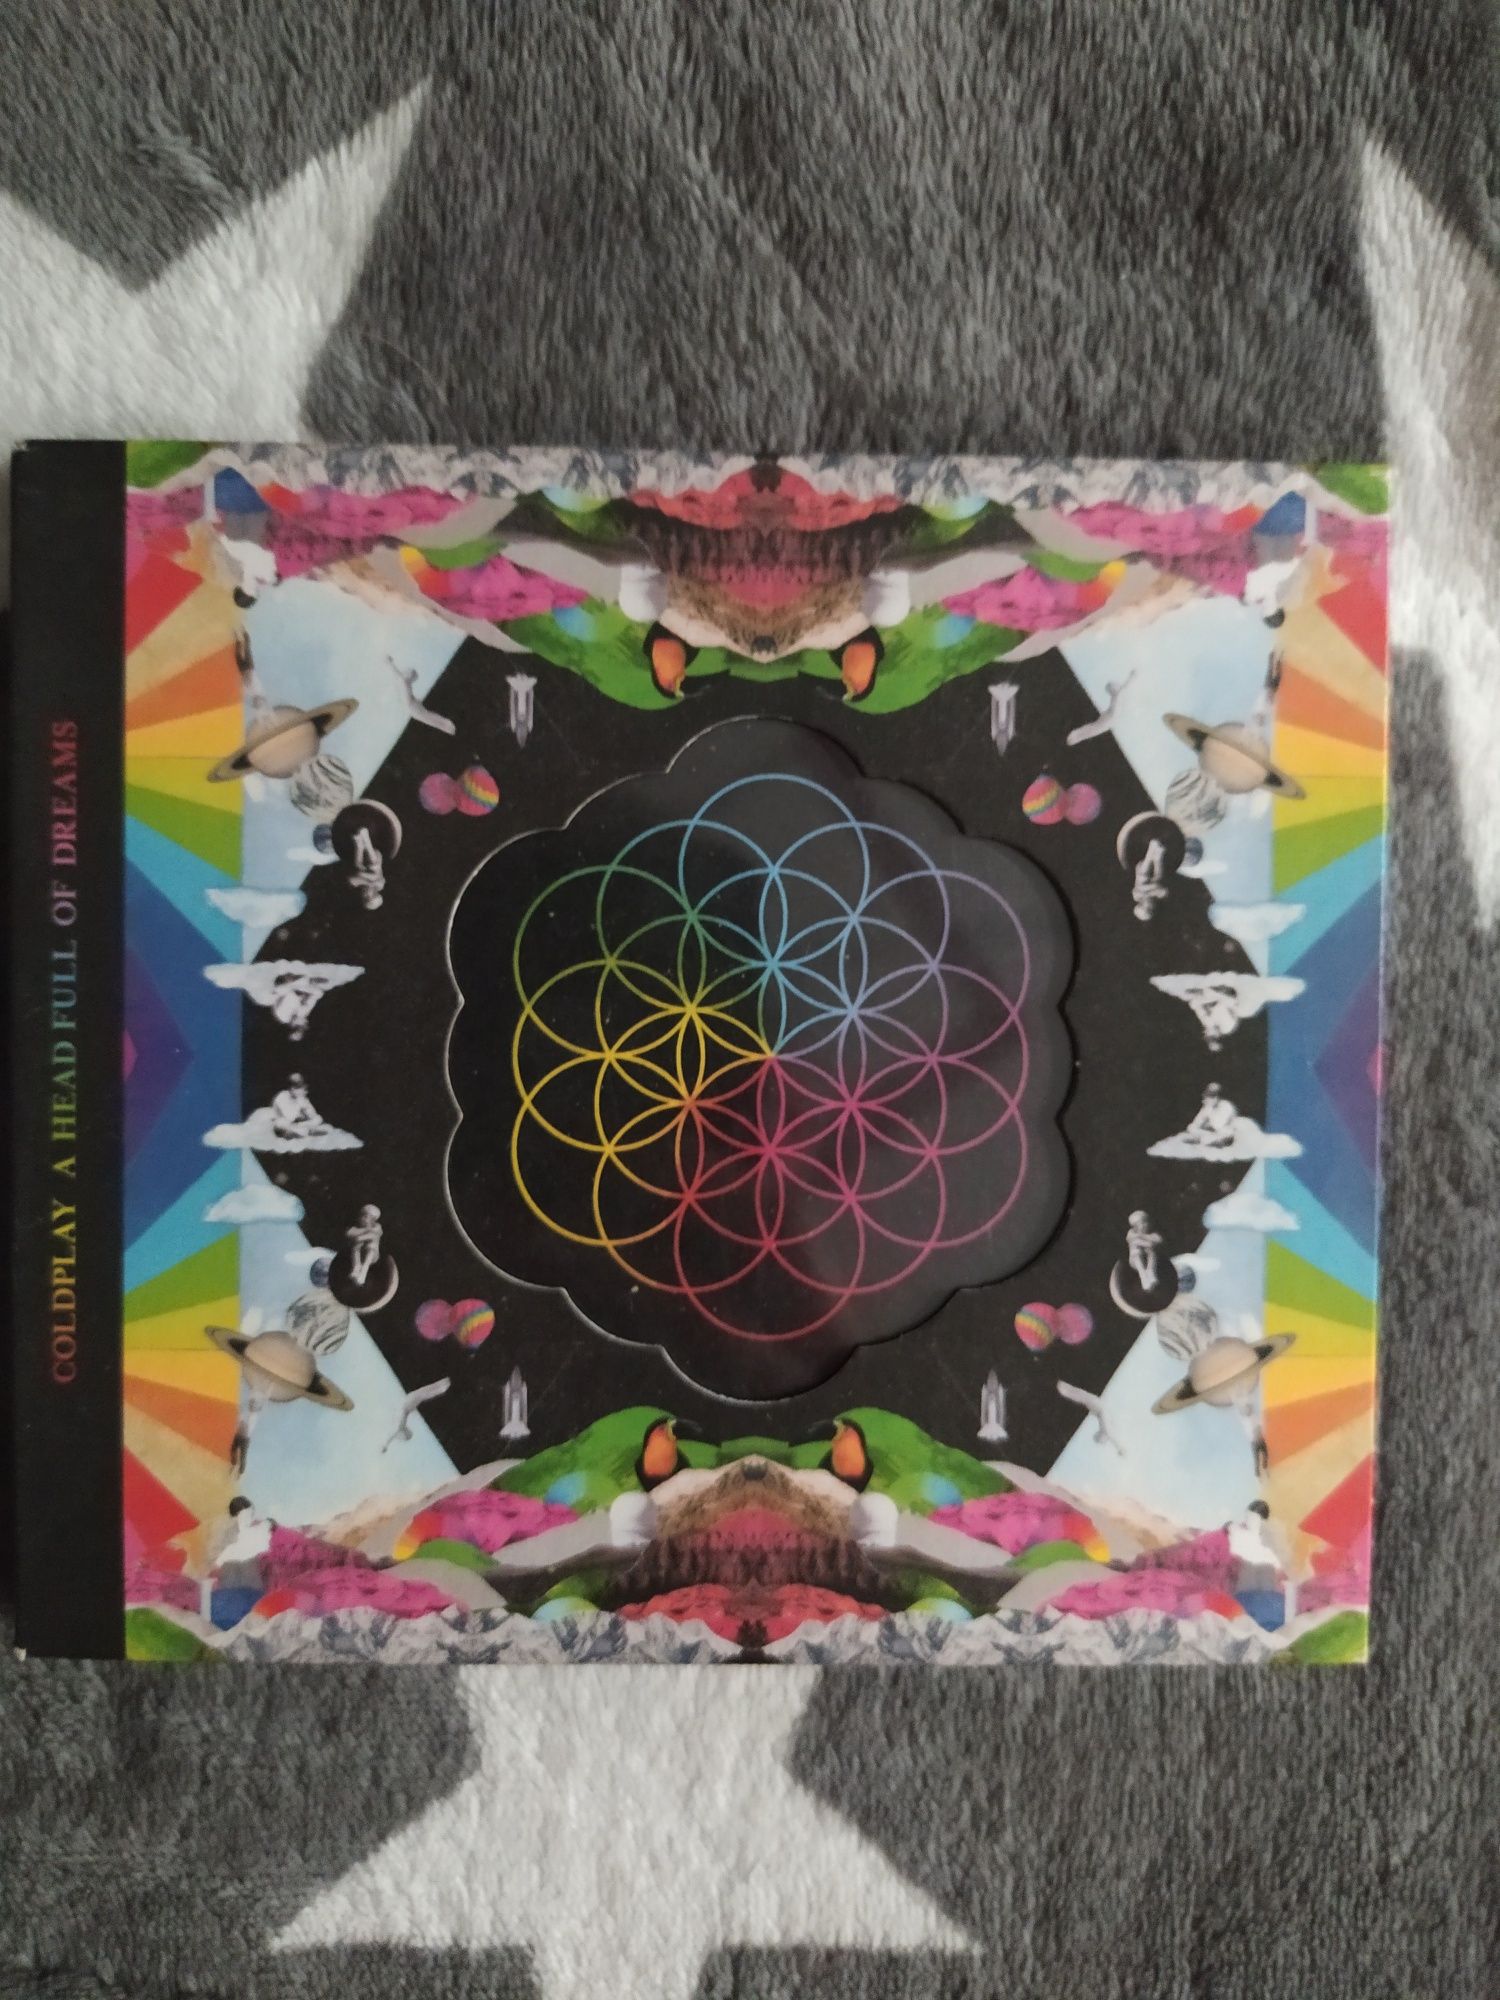 CD Coldplay - ,, A head full of dreams,,